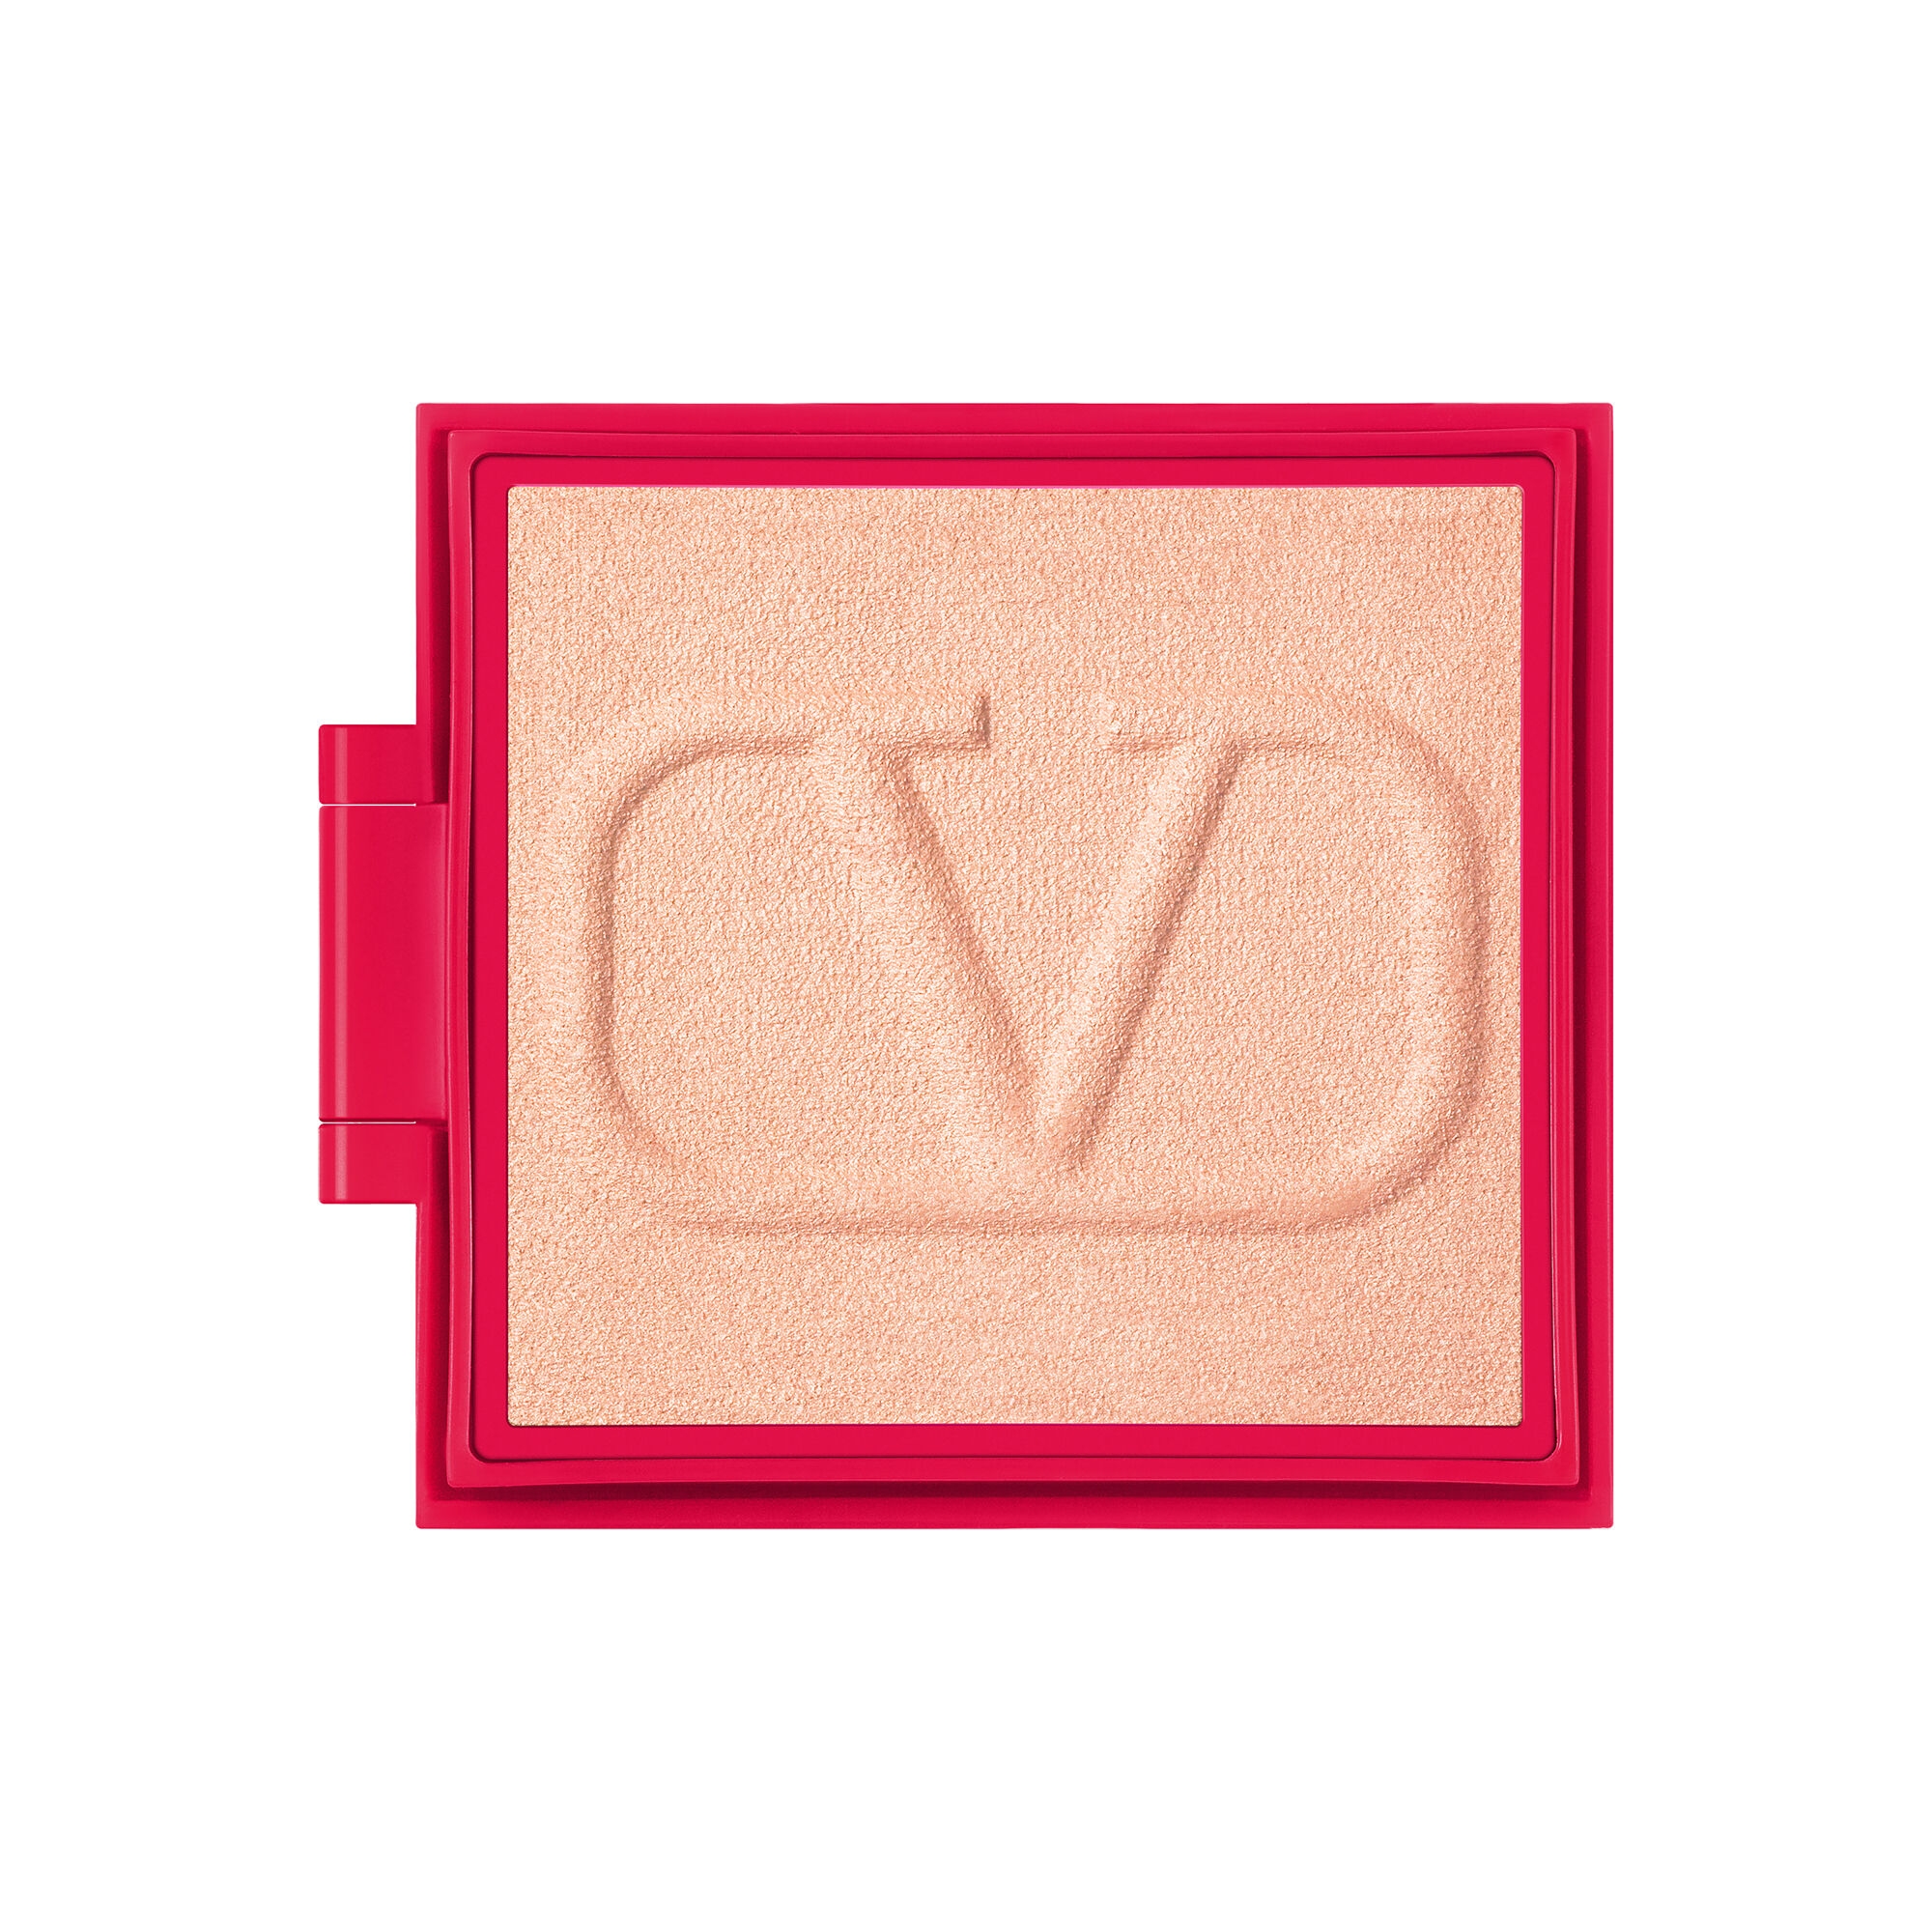 Valentino-Go-Clutch-Powder Compact-Refill-01-Very Light-3614273230964